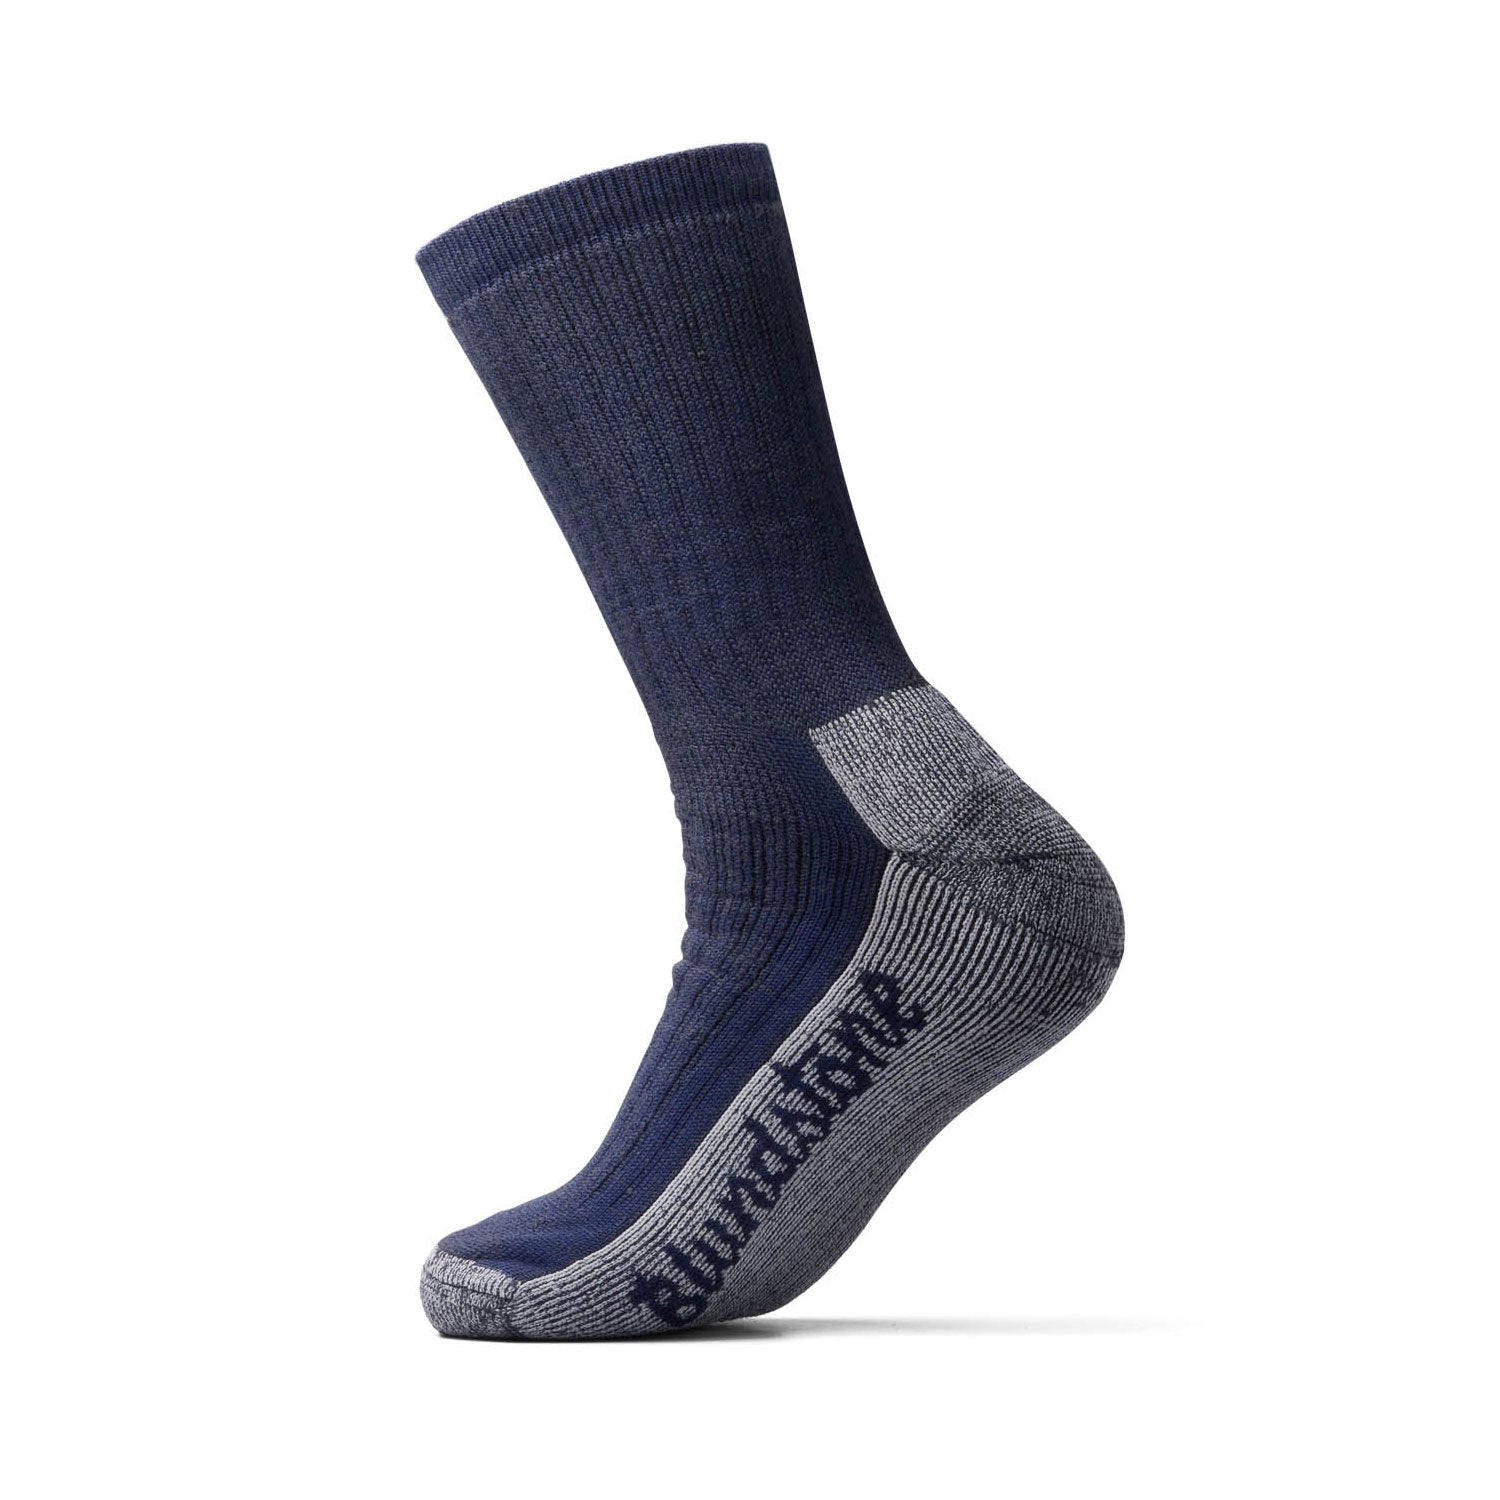 Blundstone Merino Wool Grey and Navy Sock 